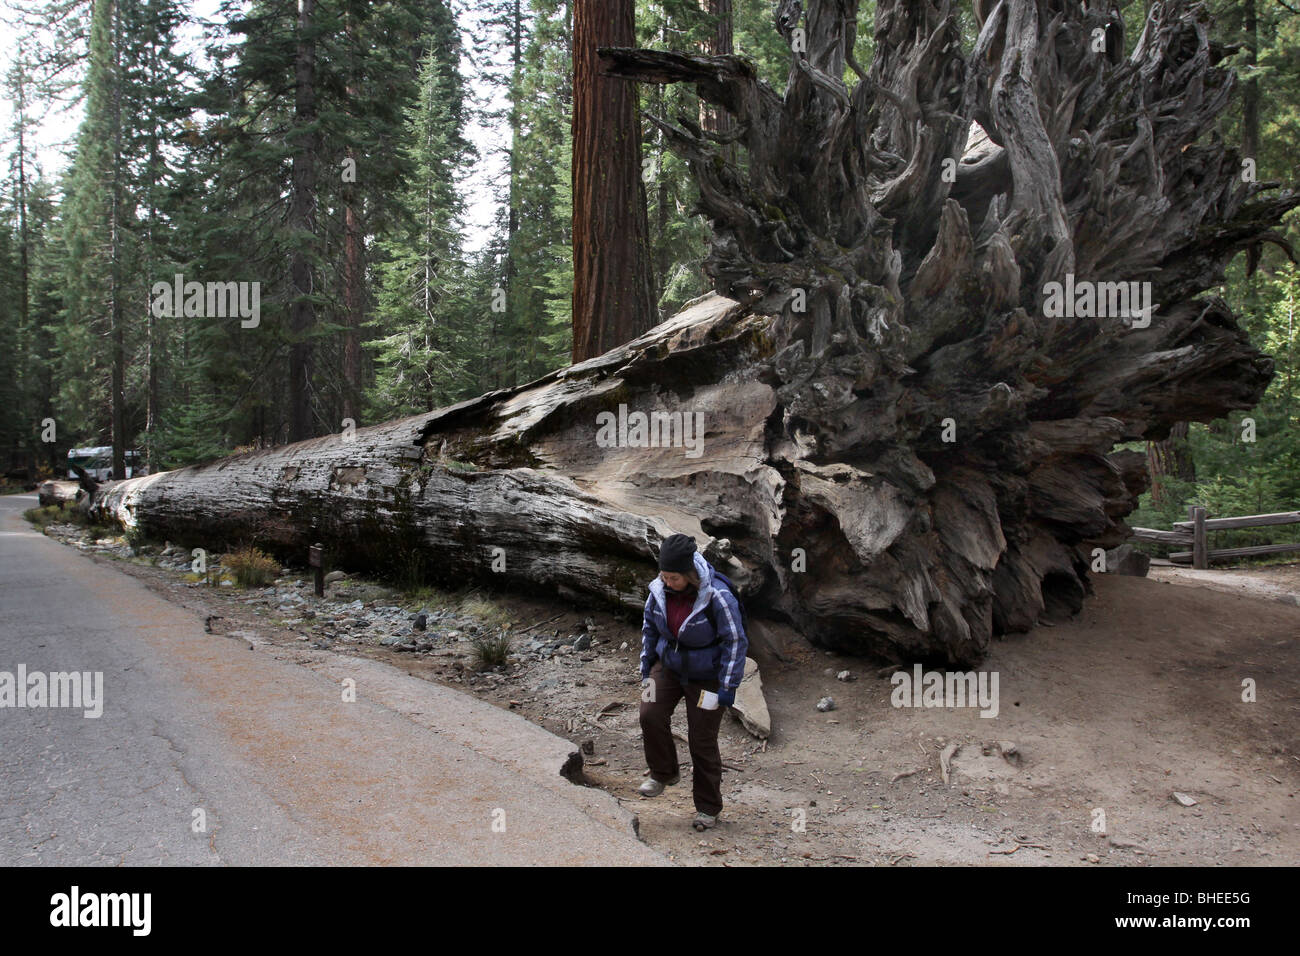 fallen tree roots Sequoia tree hiker Mariposa Grove Yosemite National Park Stock Photo